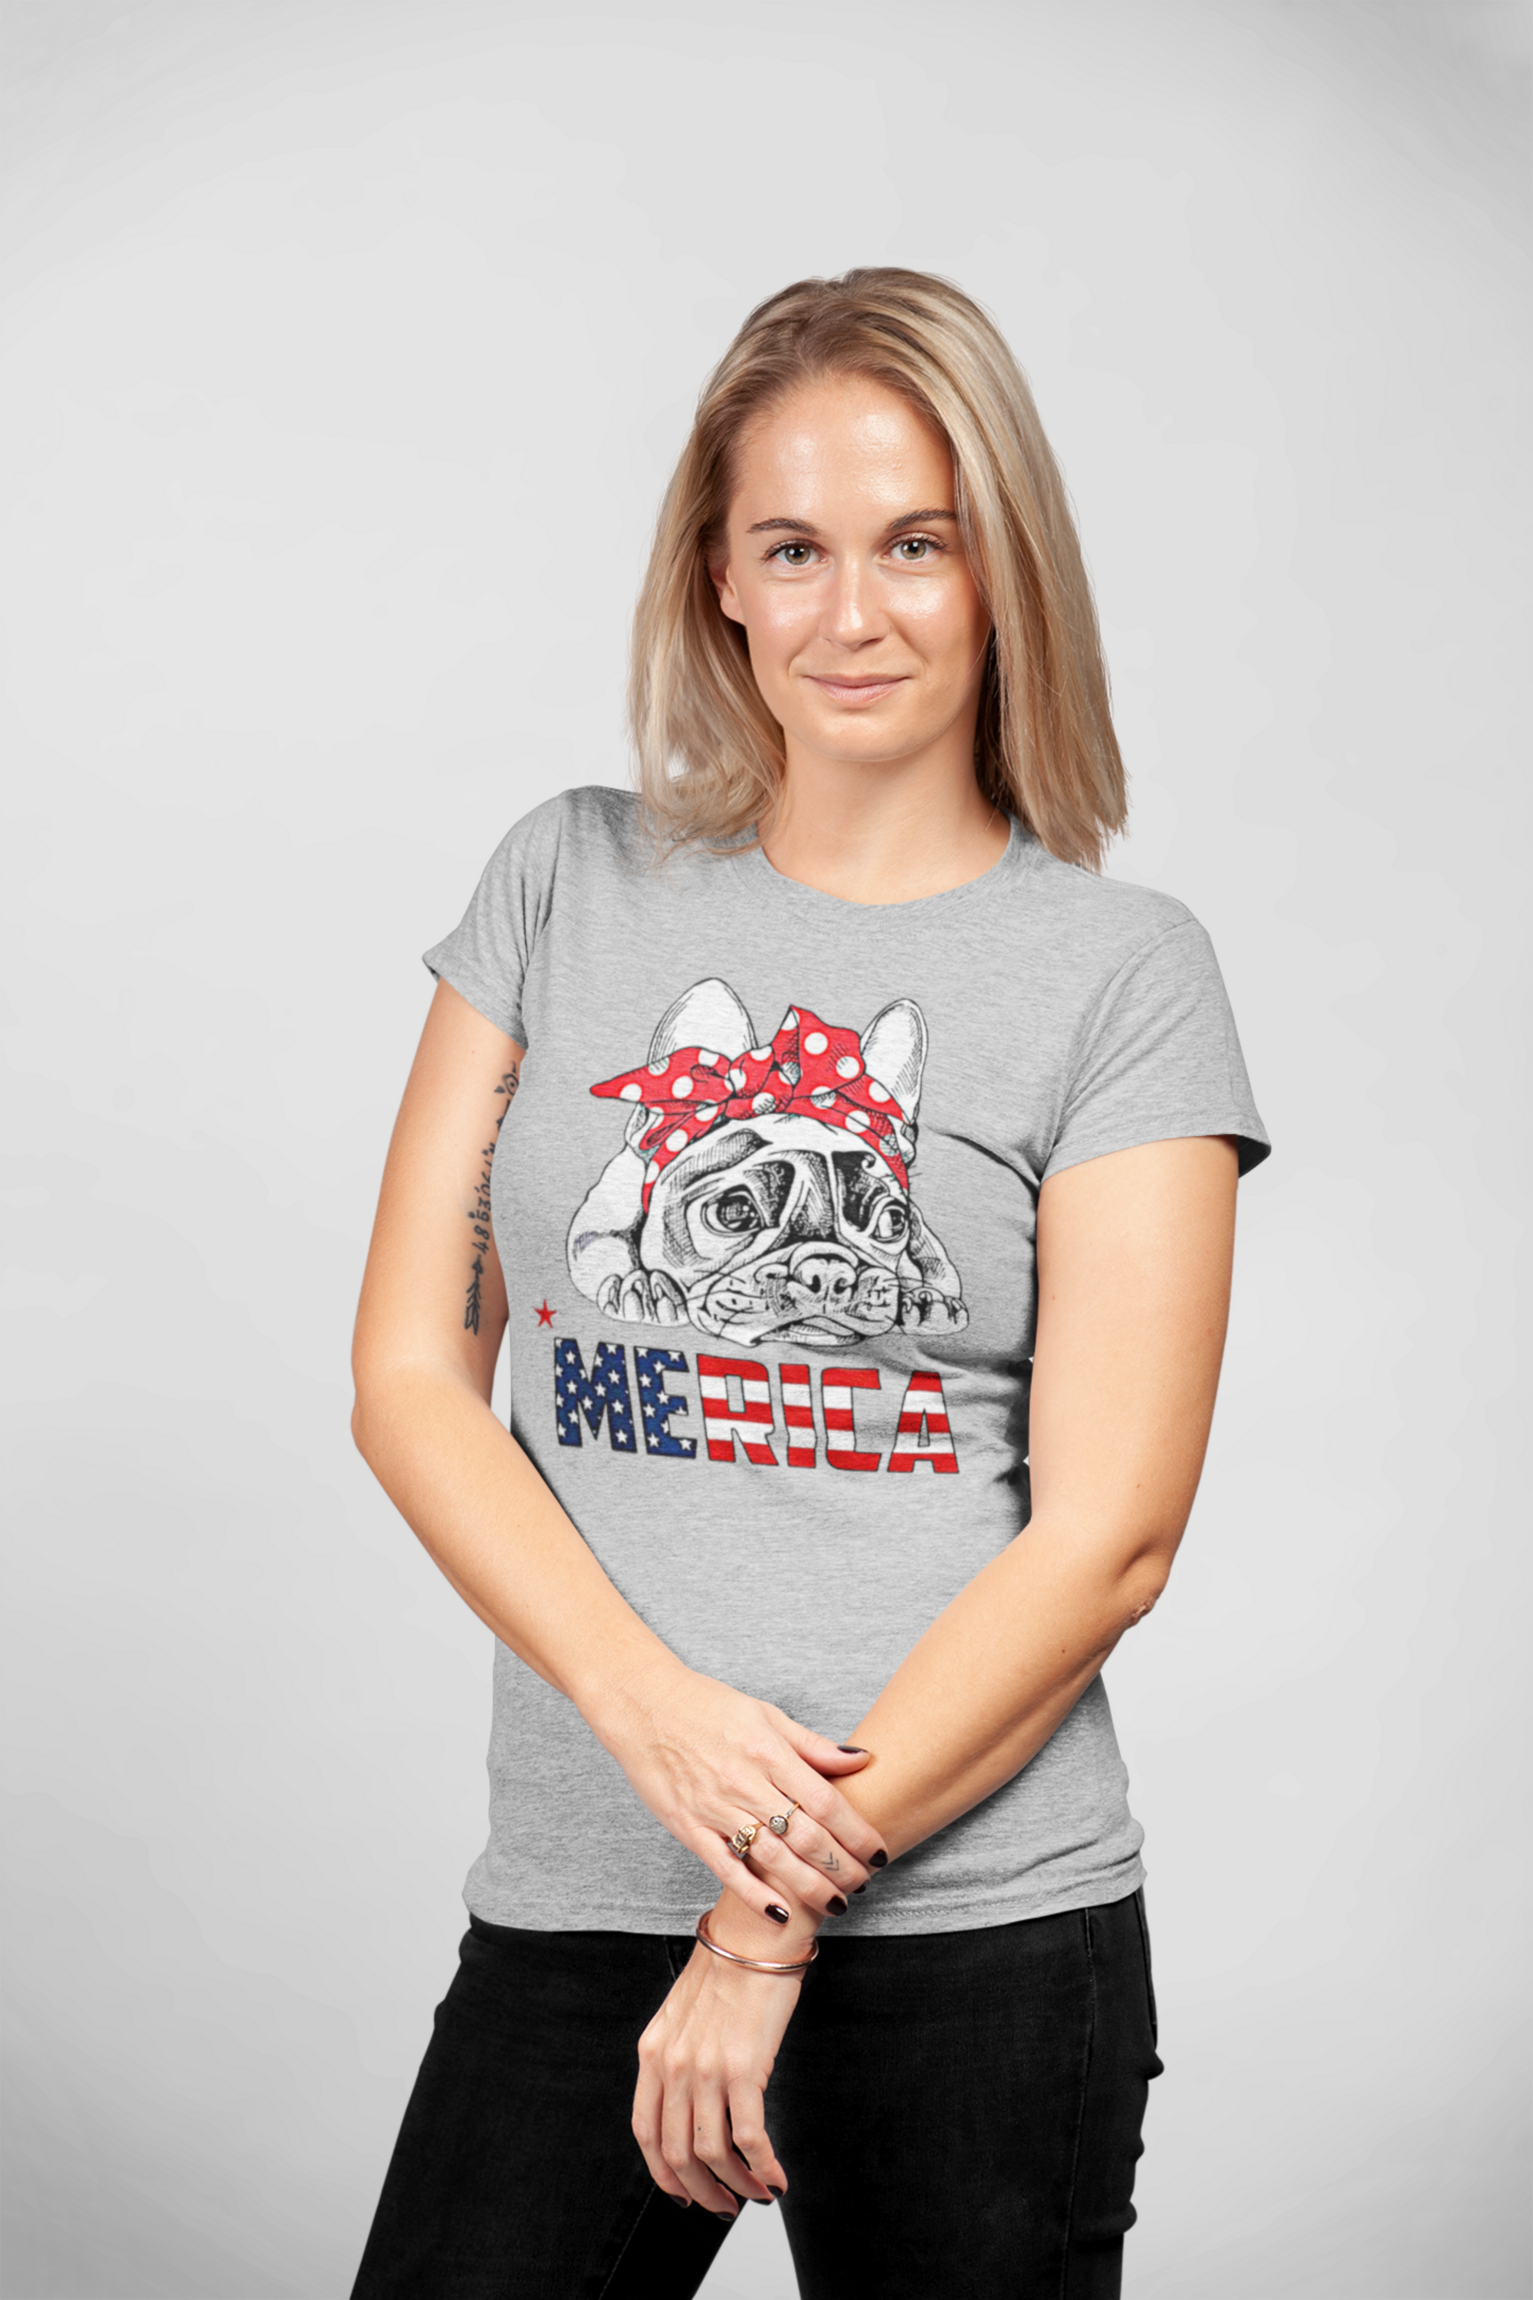 Merica shirt, 4th of july shirt women, French bulldog, French bulldog gifts, Frenchie, Women Gift idea, Patriotic shirt, Dog lover shirt - image 1 of 1